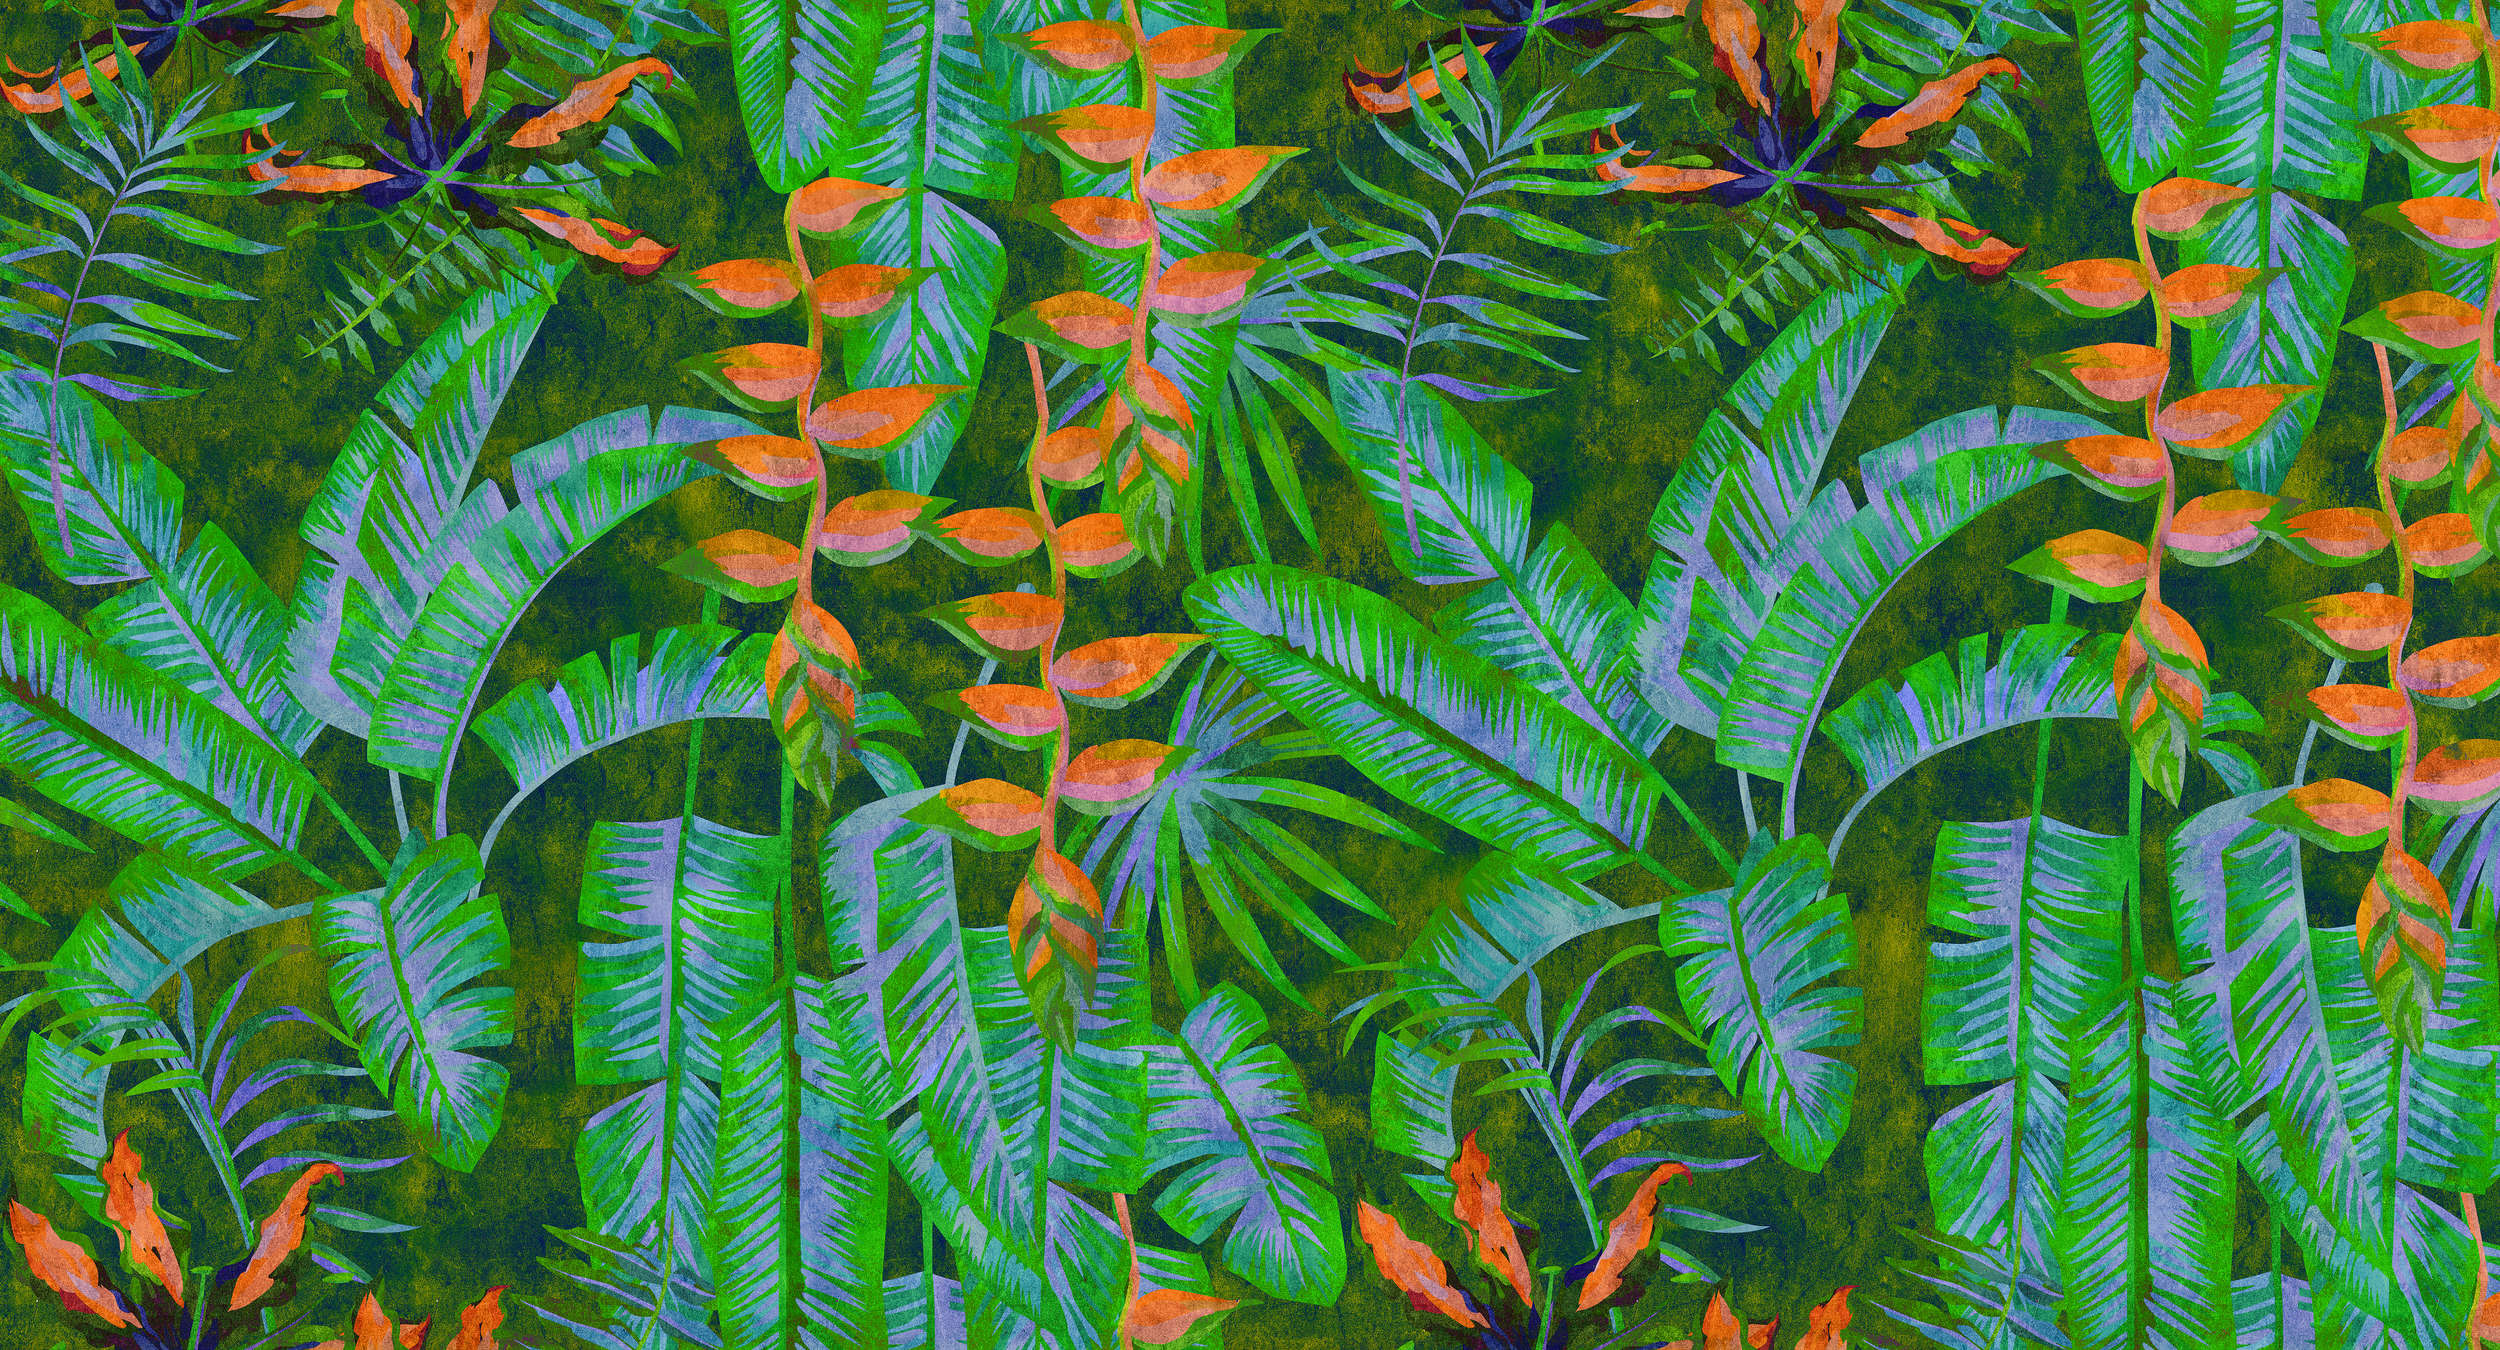             Tropicana 4 - Jungle wallpaper with bright colours - blotting paper structure - green, orange | matt smooth fleece
        